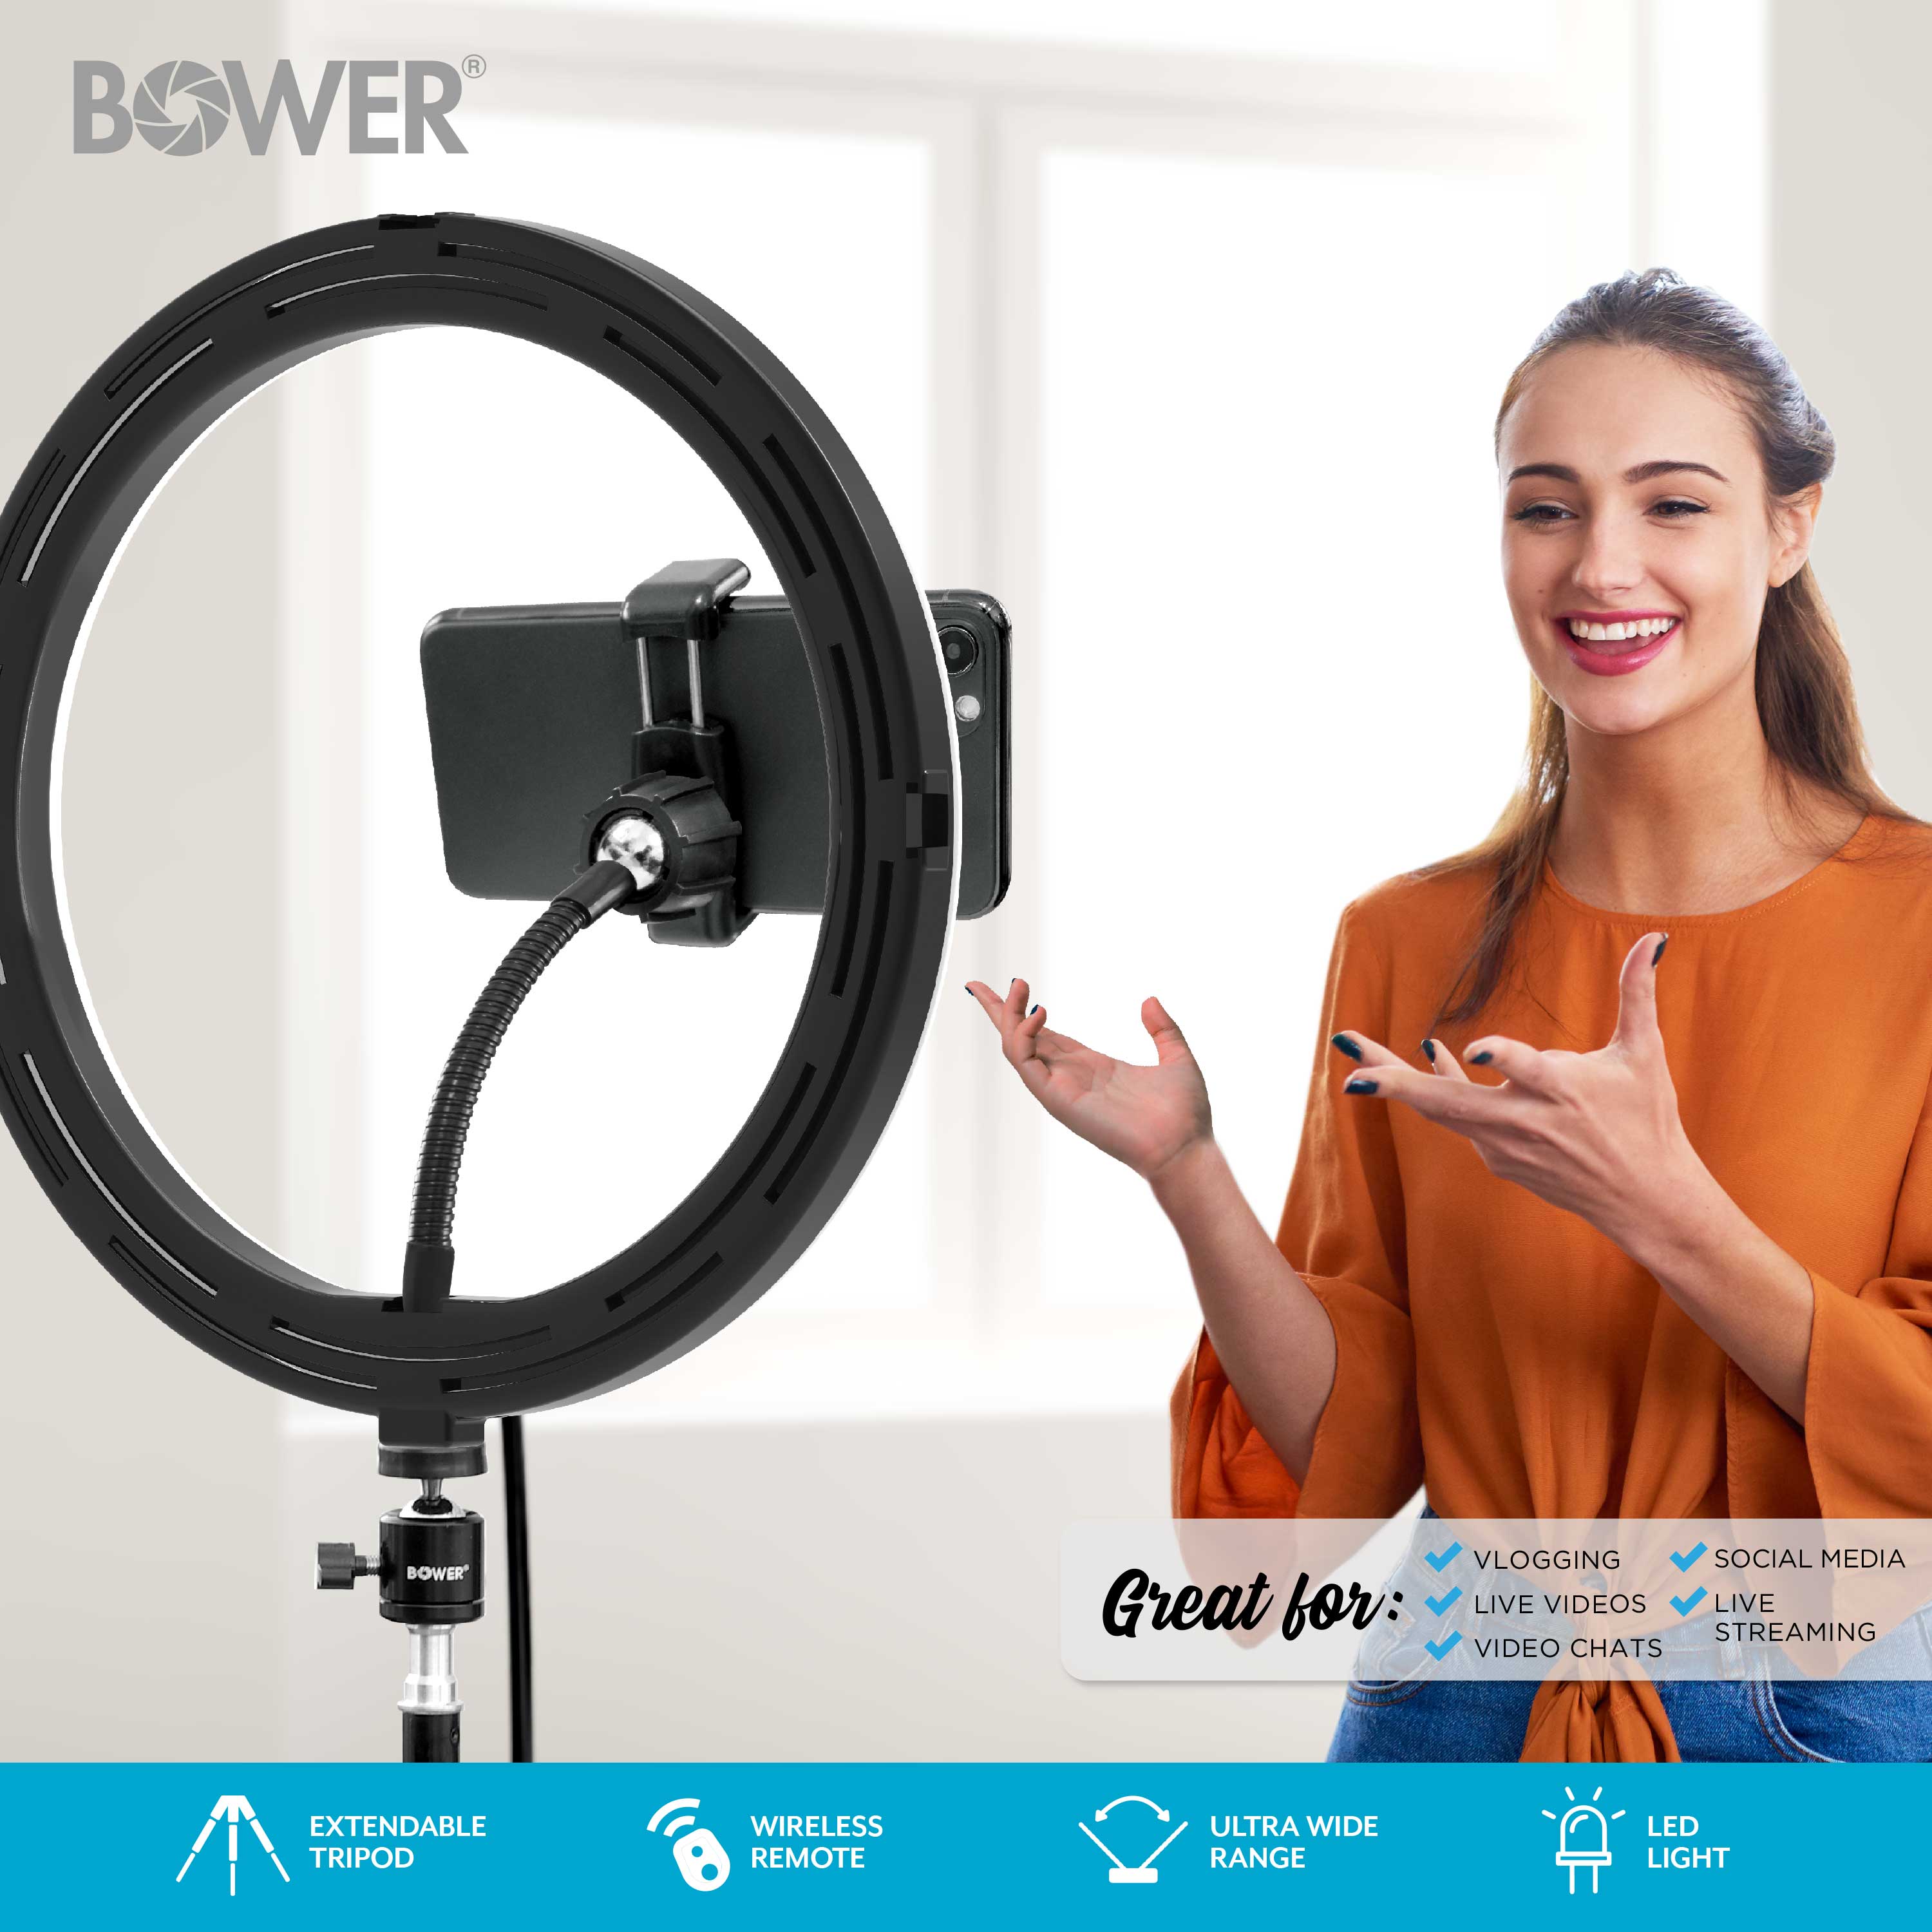 Bower 12” Studio Light USB Power Ball-Head Mount 62" Adjustable Tripod 3 Colors 10 Brightness Levels In-Line Remote - image 2 of 7